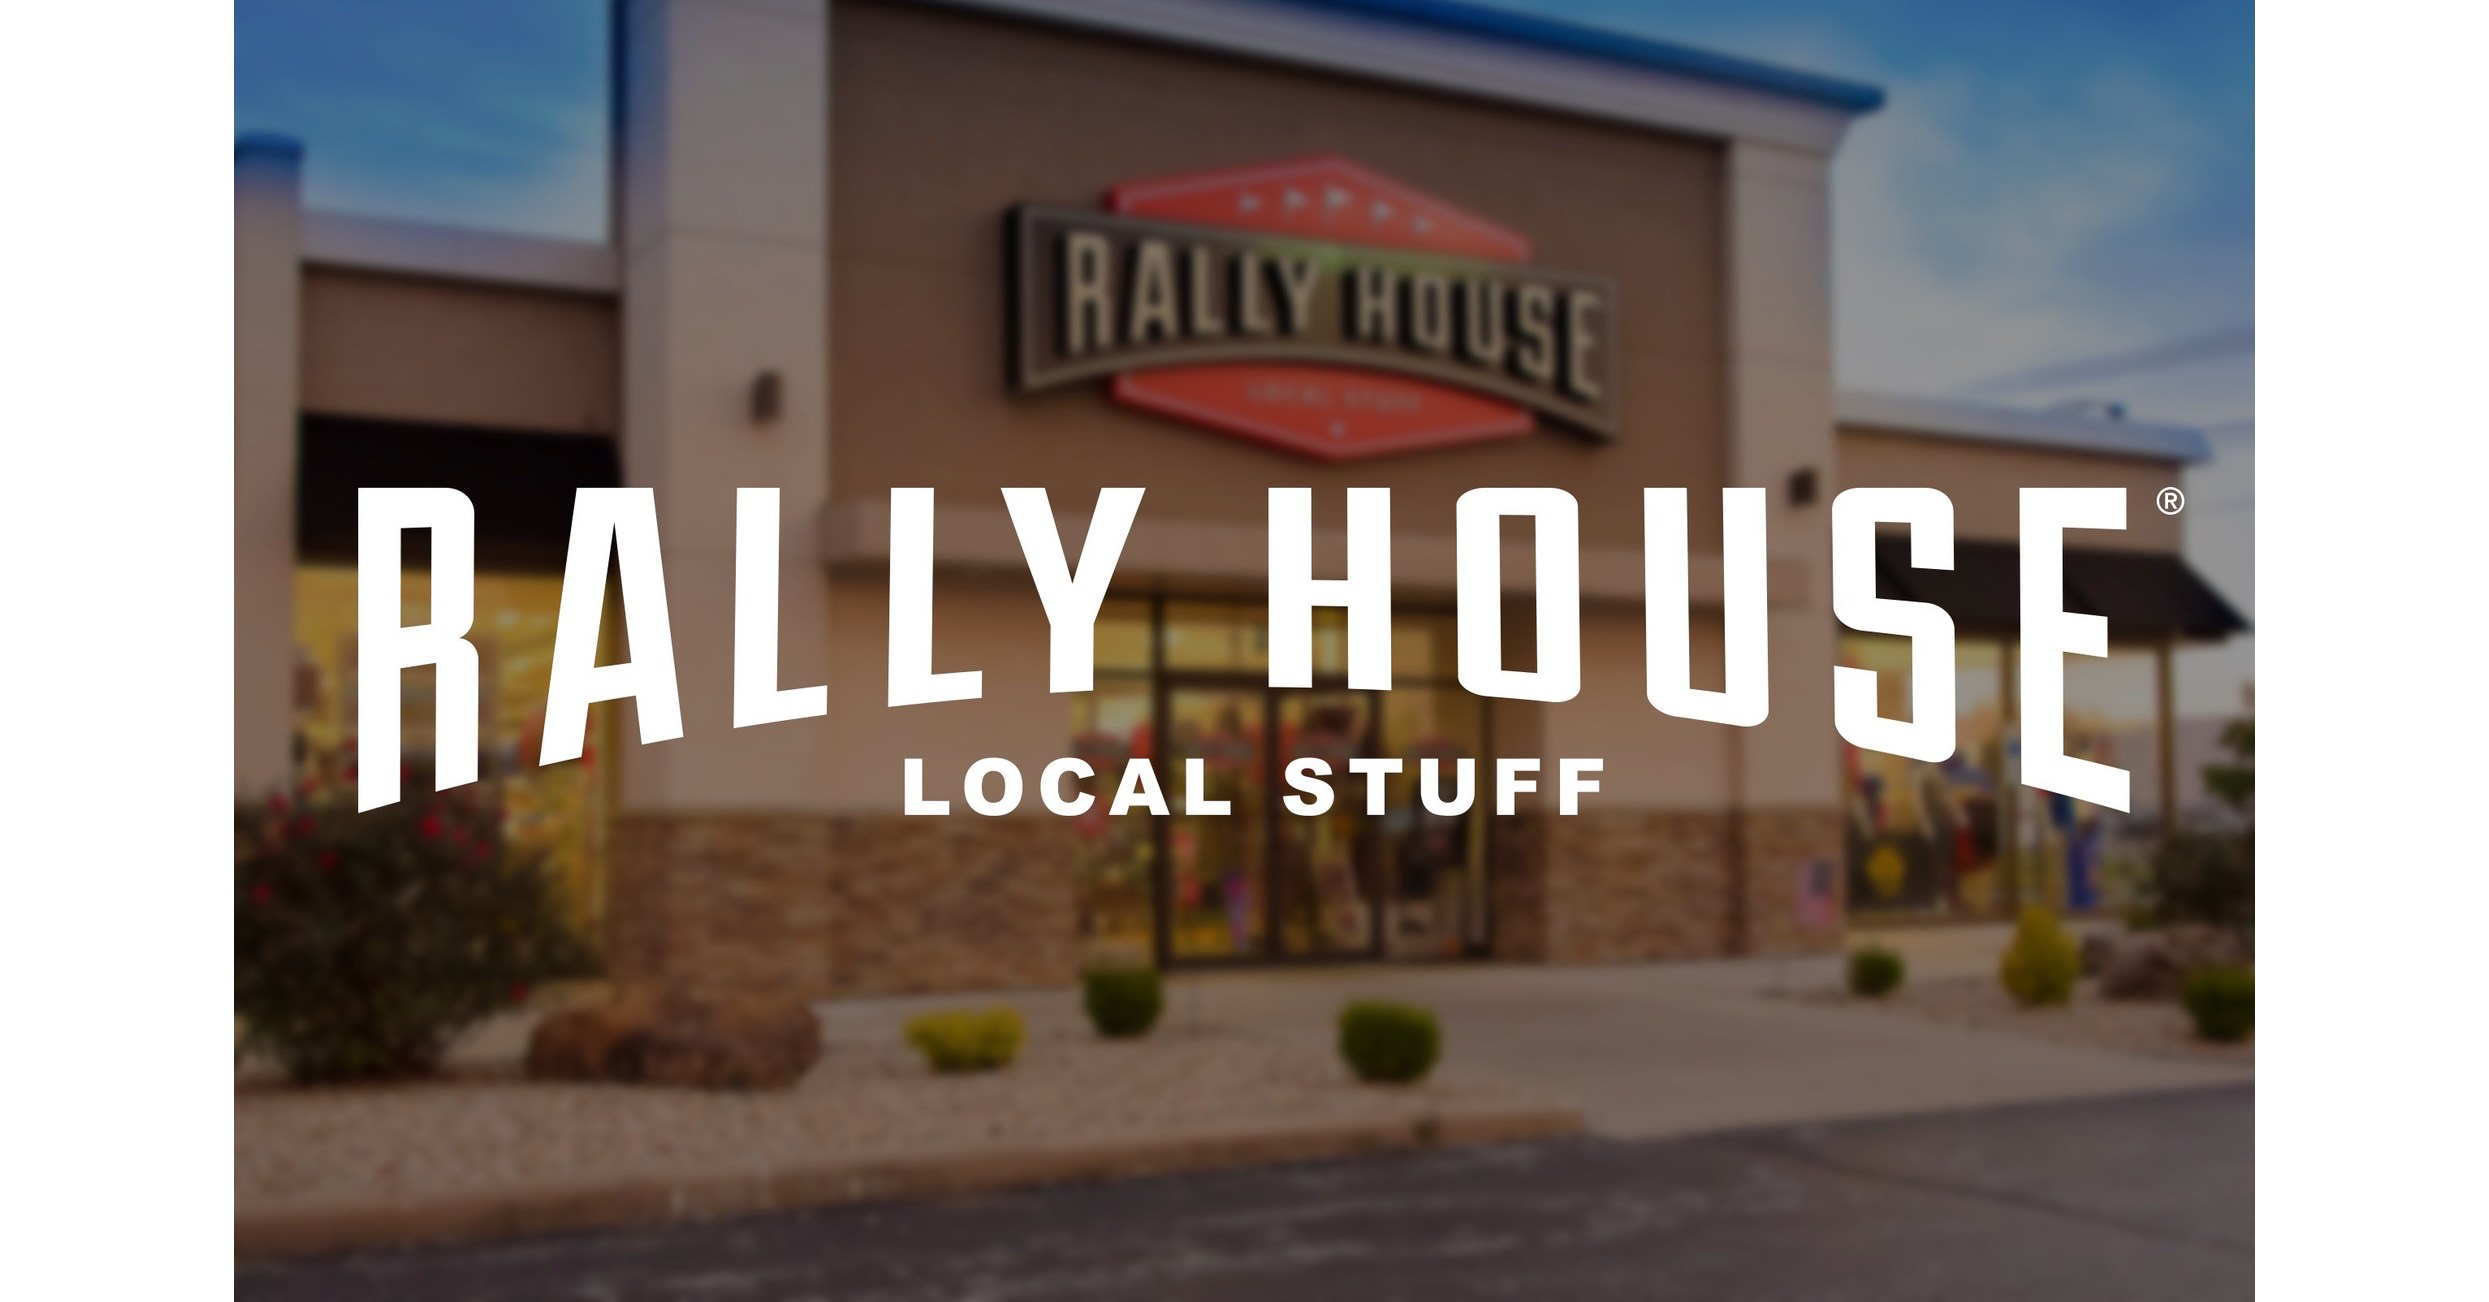 Rally House - Kansas City, MO 64112